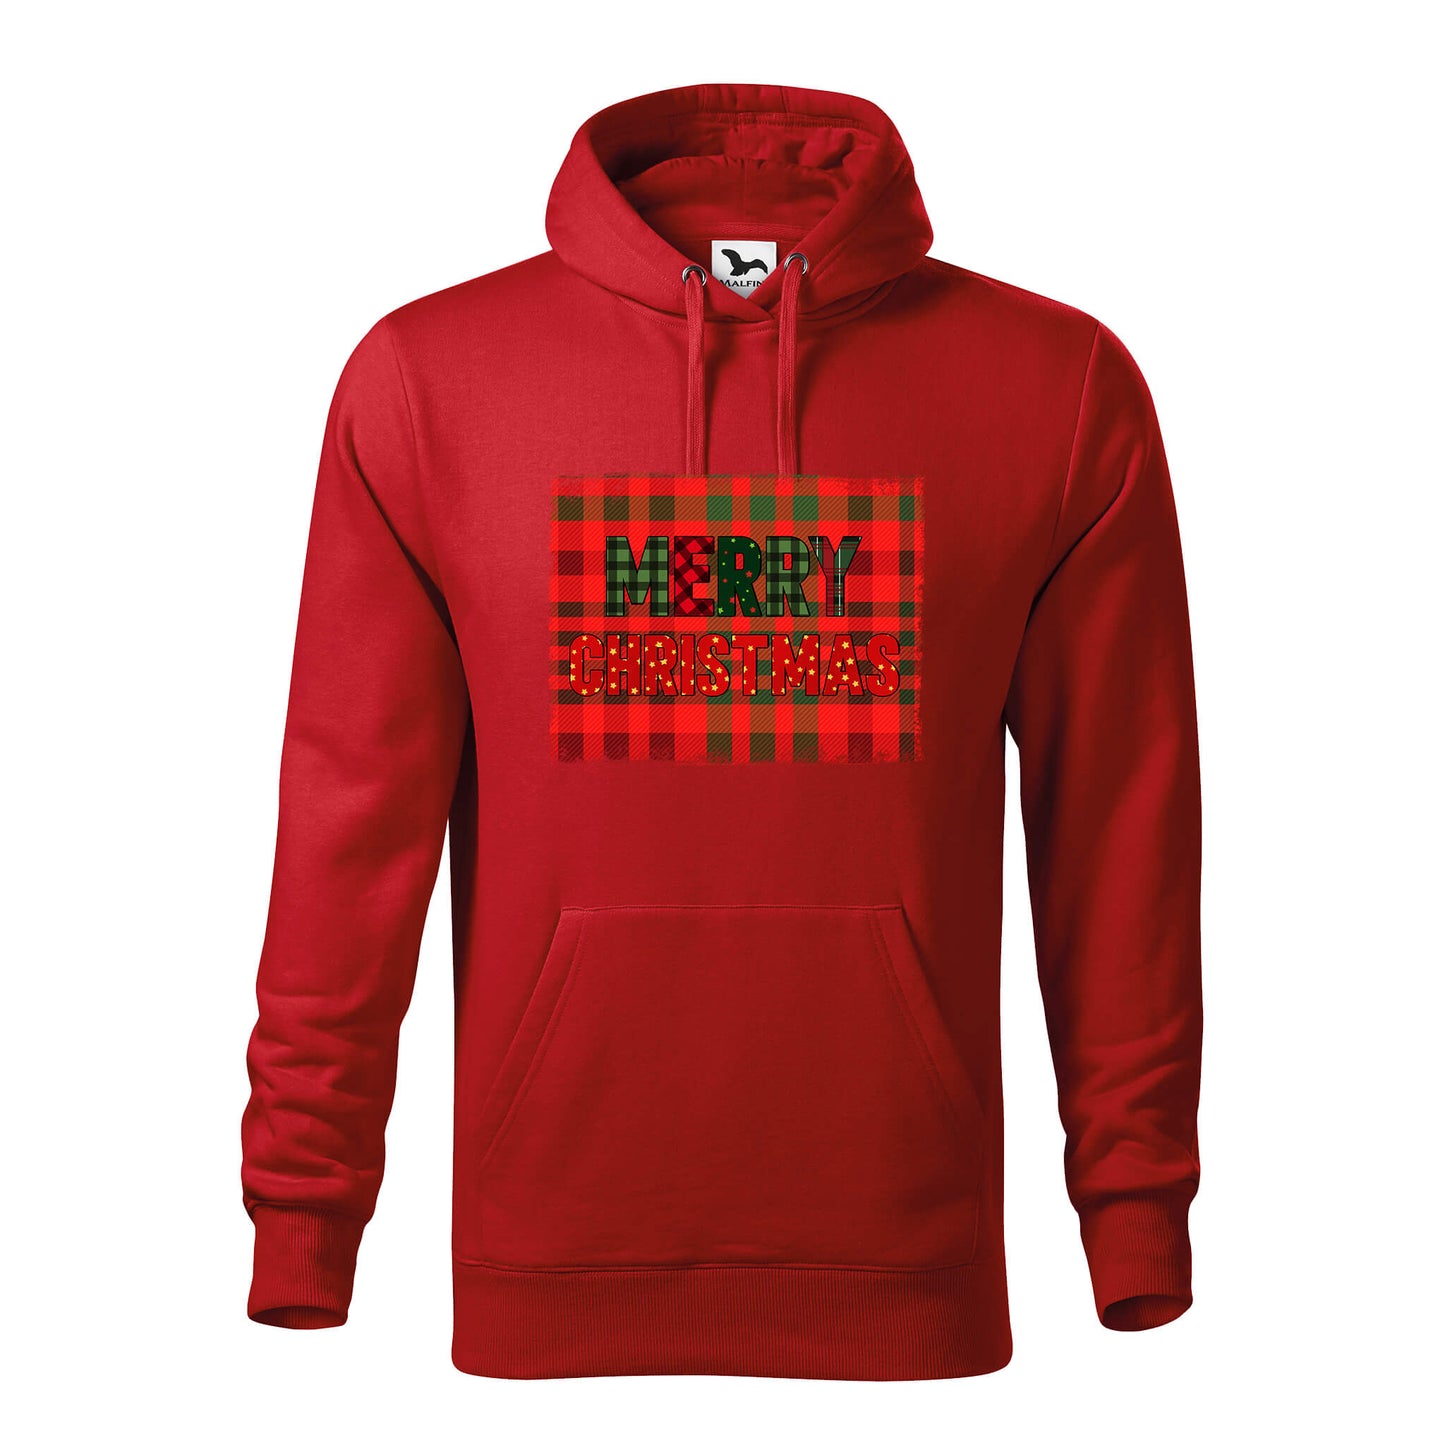 Merry christmas4 hoodie - rvdesignprint